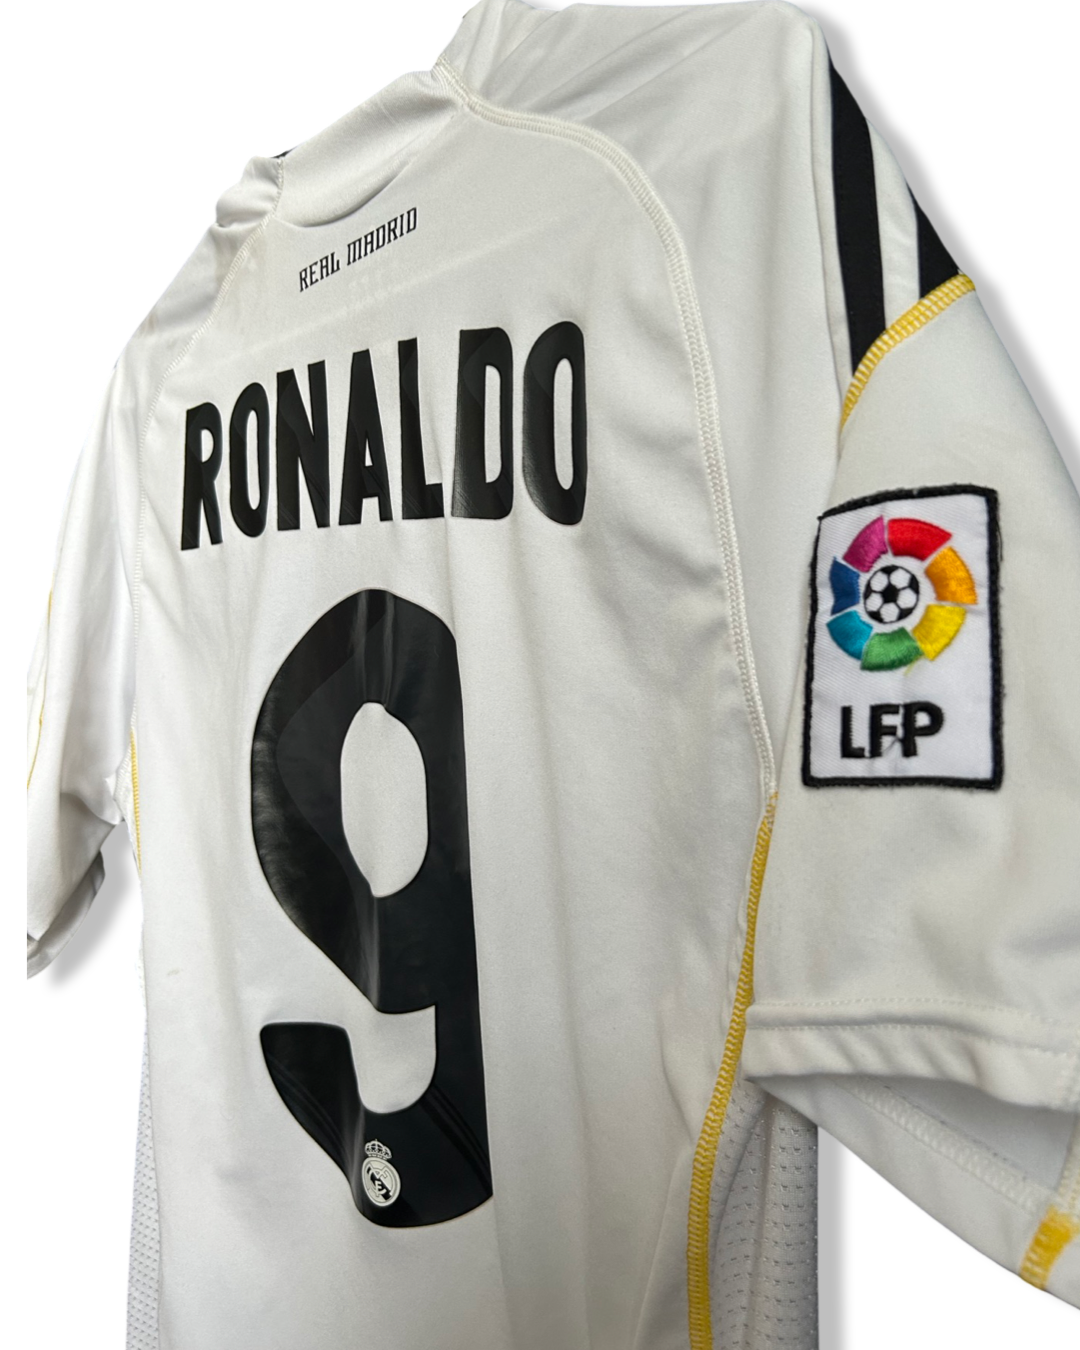 Real Madrid 2009/2010 Home Shirt, #9 Cristiano Ronaldo